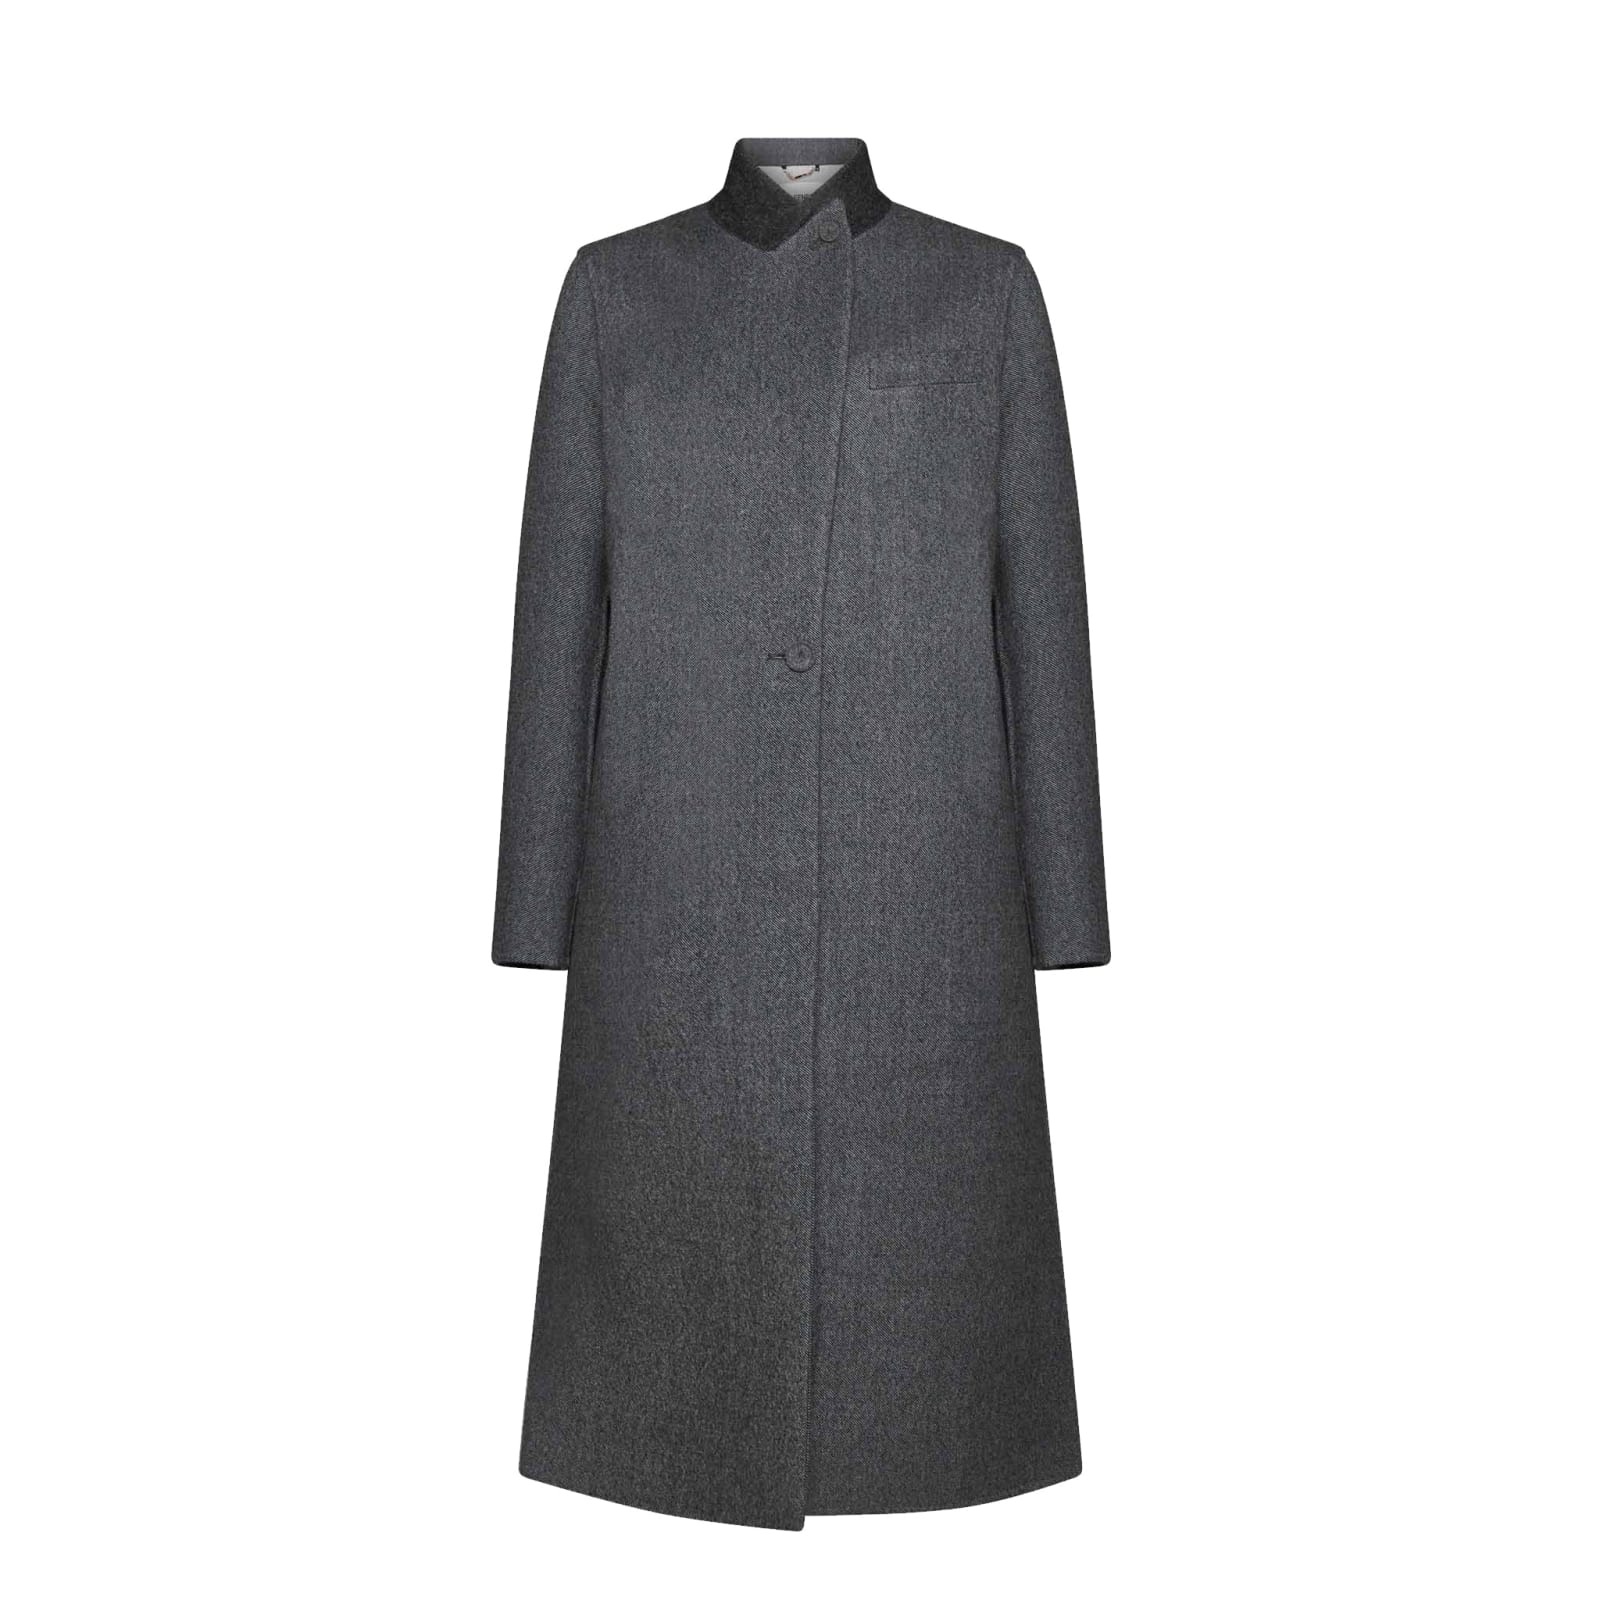 Fendi Wool Coat